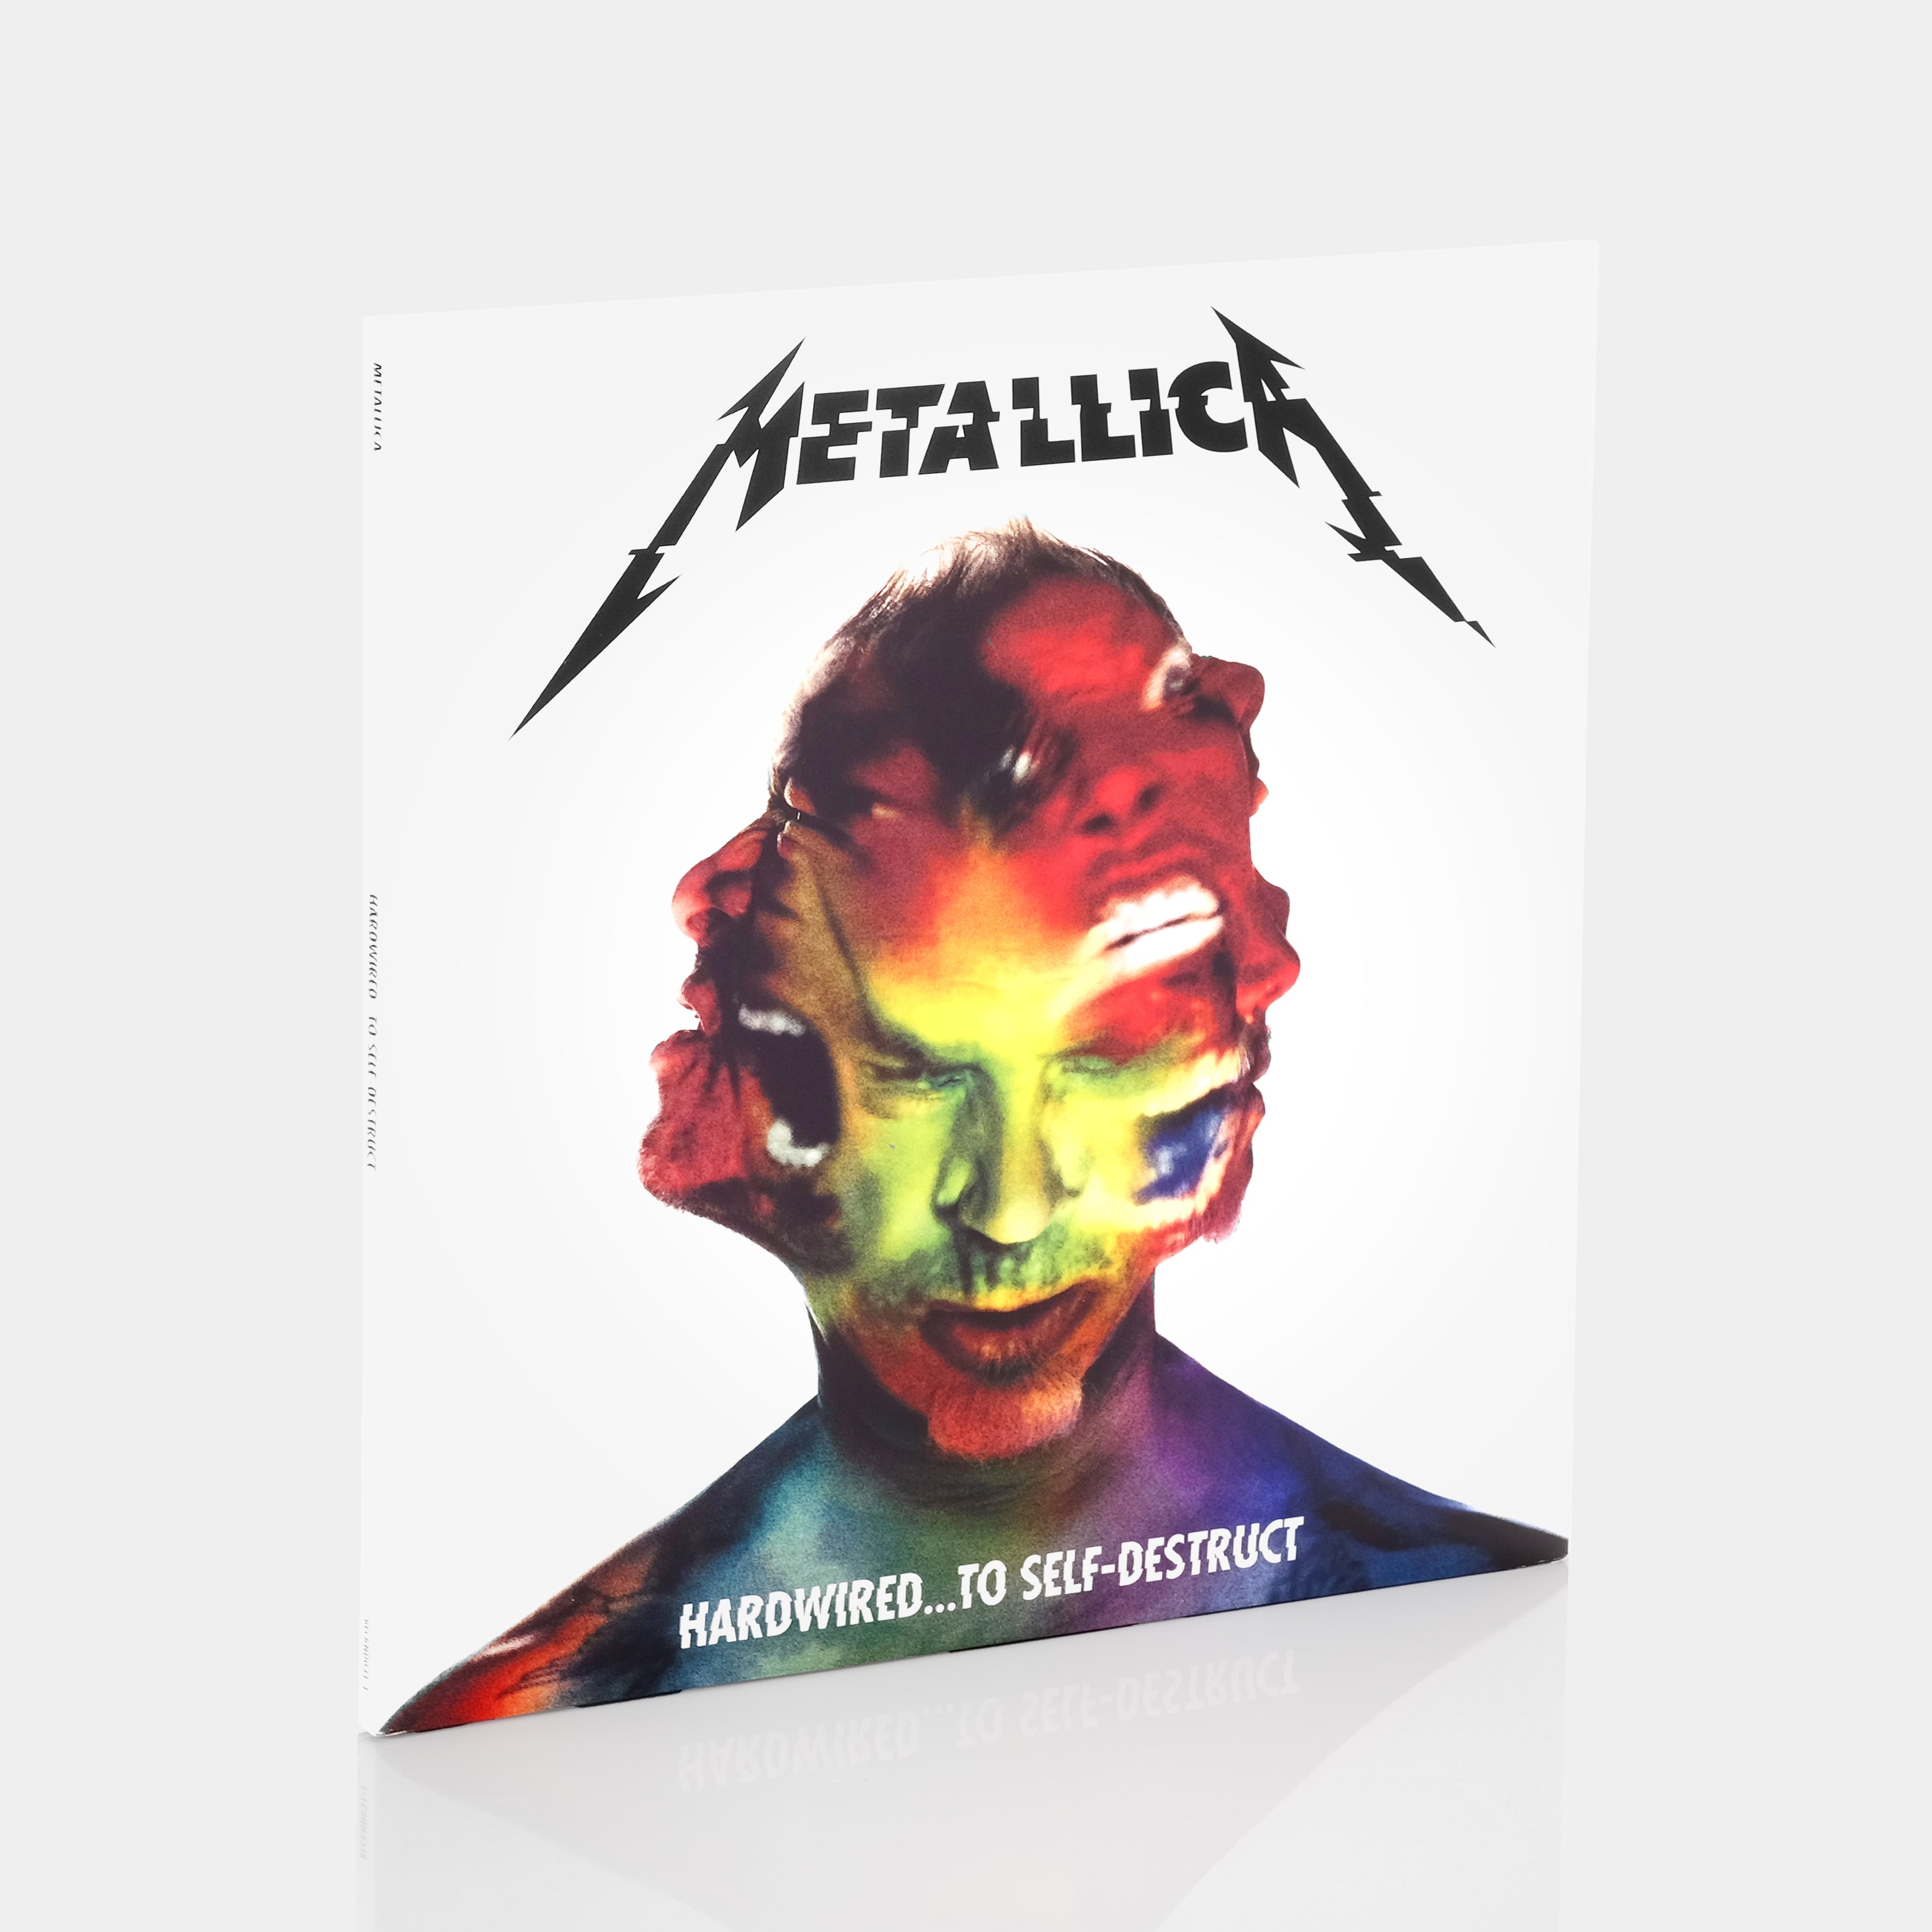 Metallica - Hardwired... To Self-Destruct 2xLP Vinyl Record